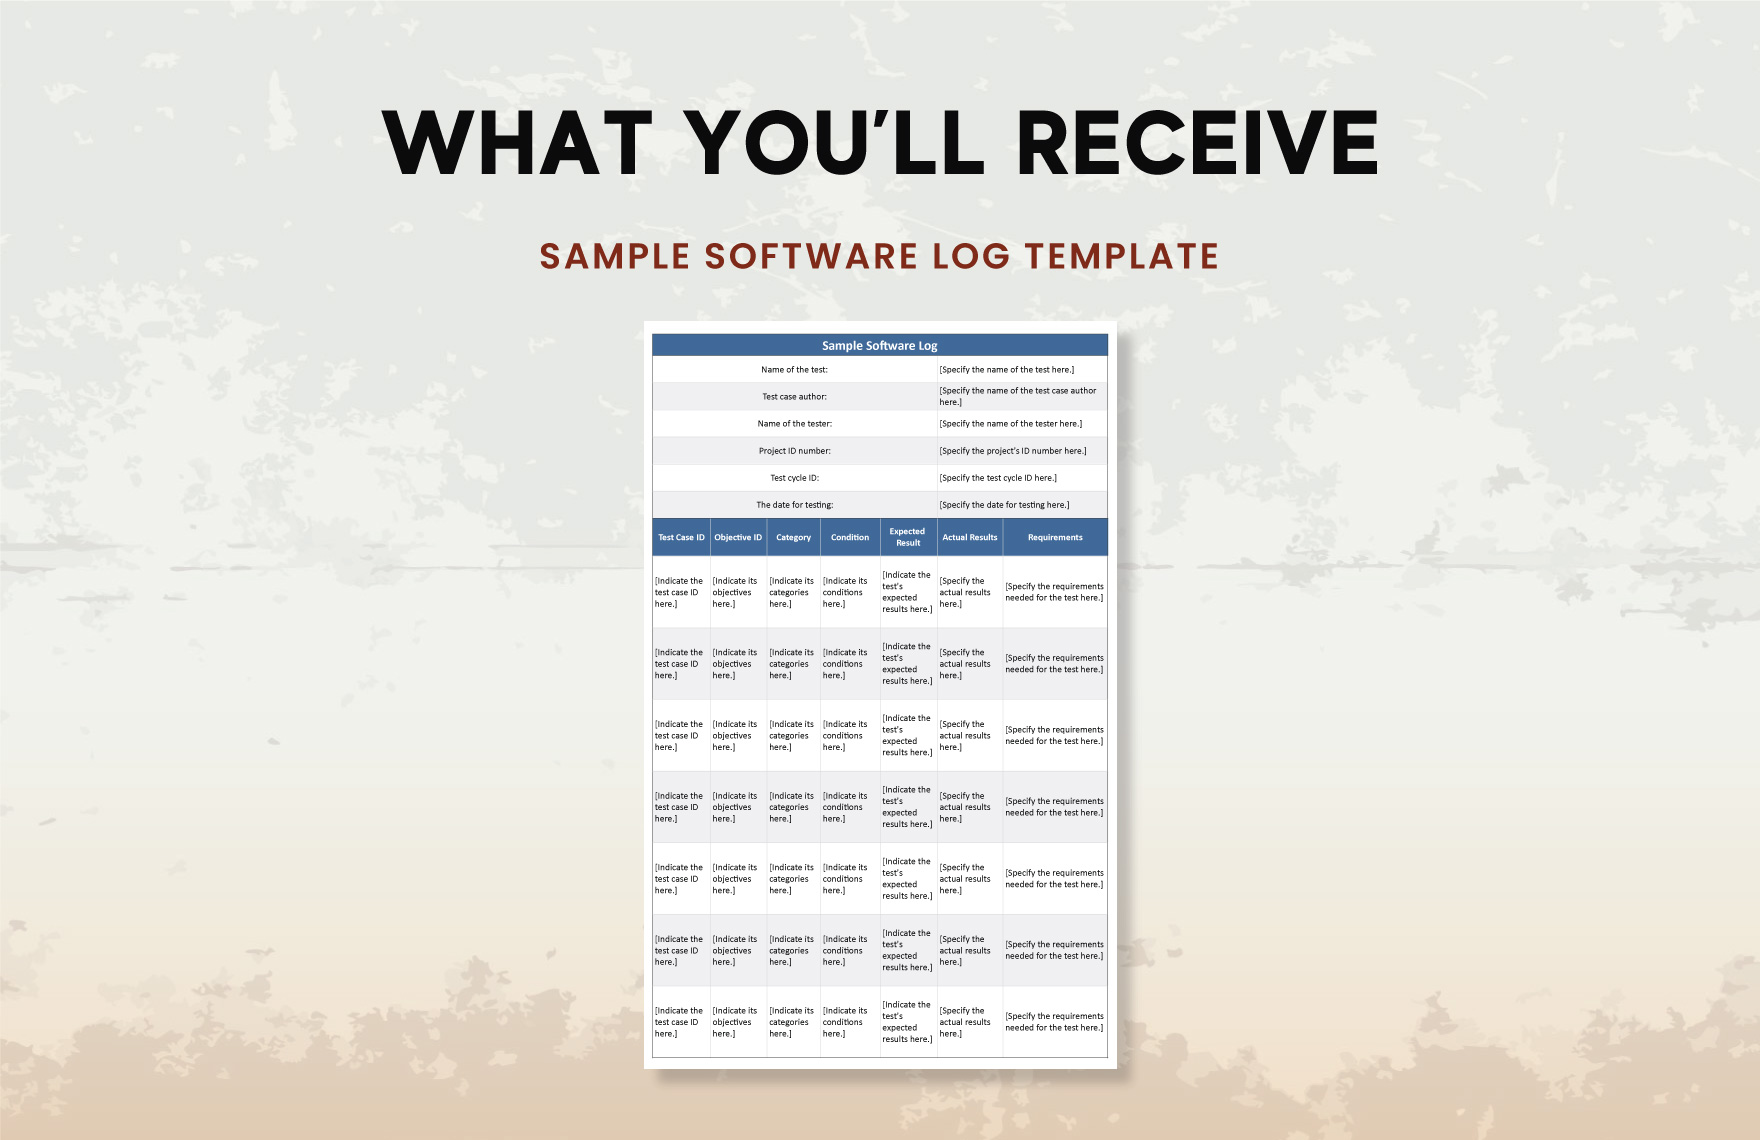 Sample Software Log Template